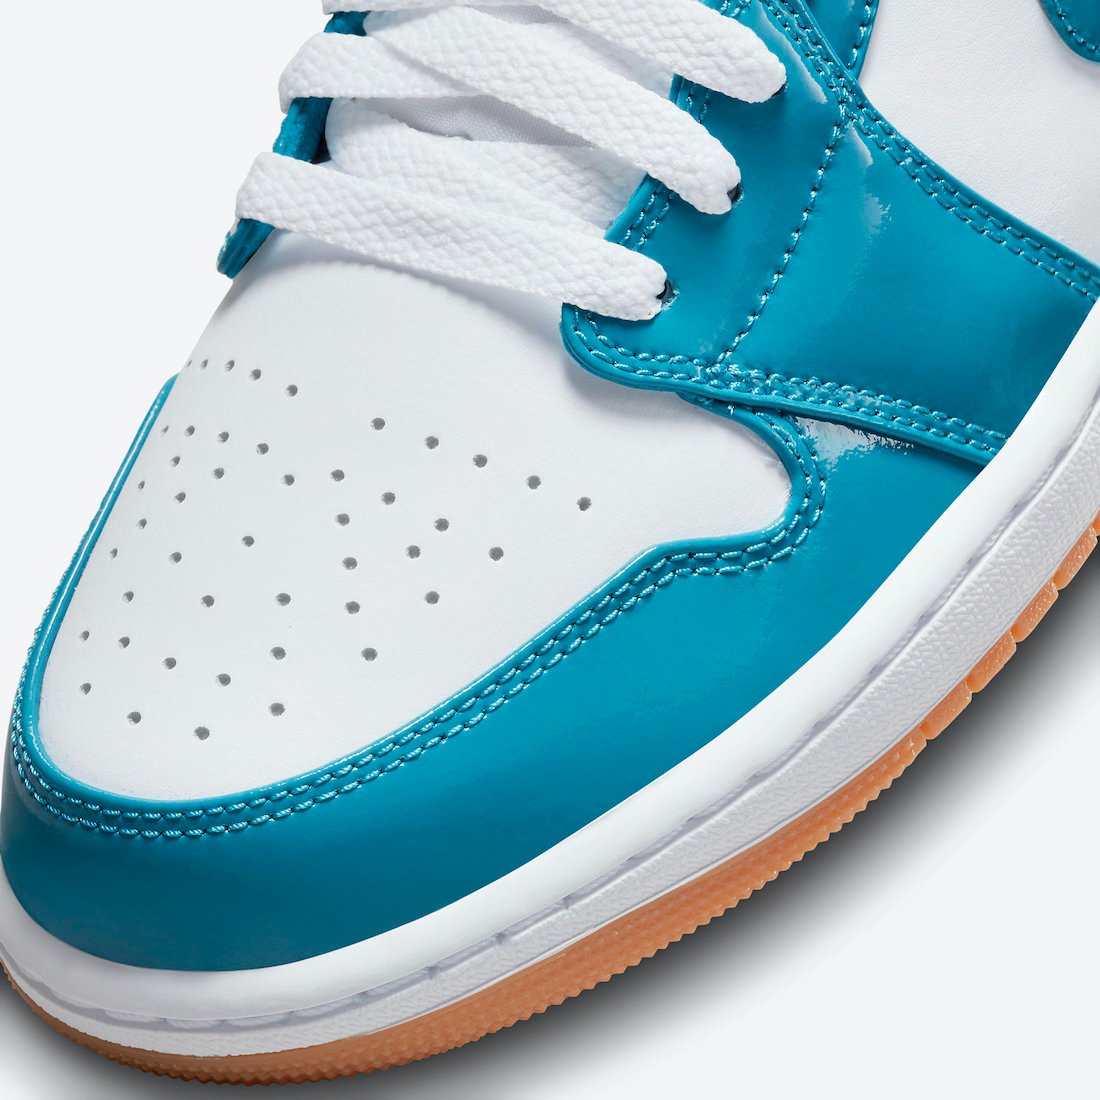 Air Jordan 1 Low Blue Patent Leather Gum Soles DC6991-400 Release Date Info